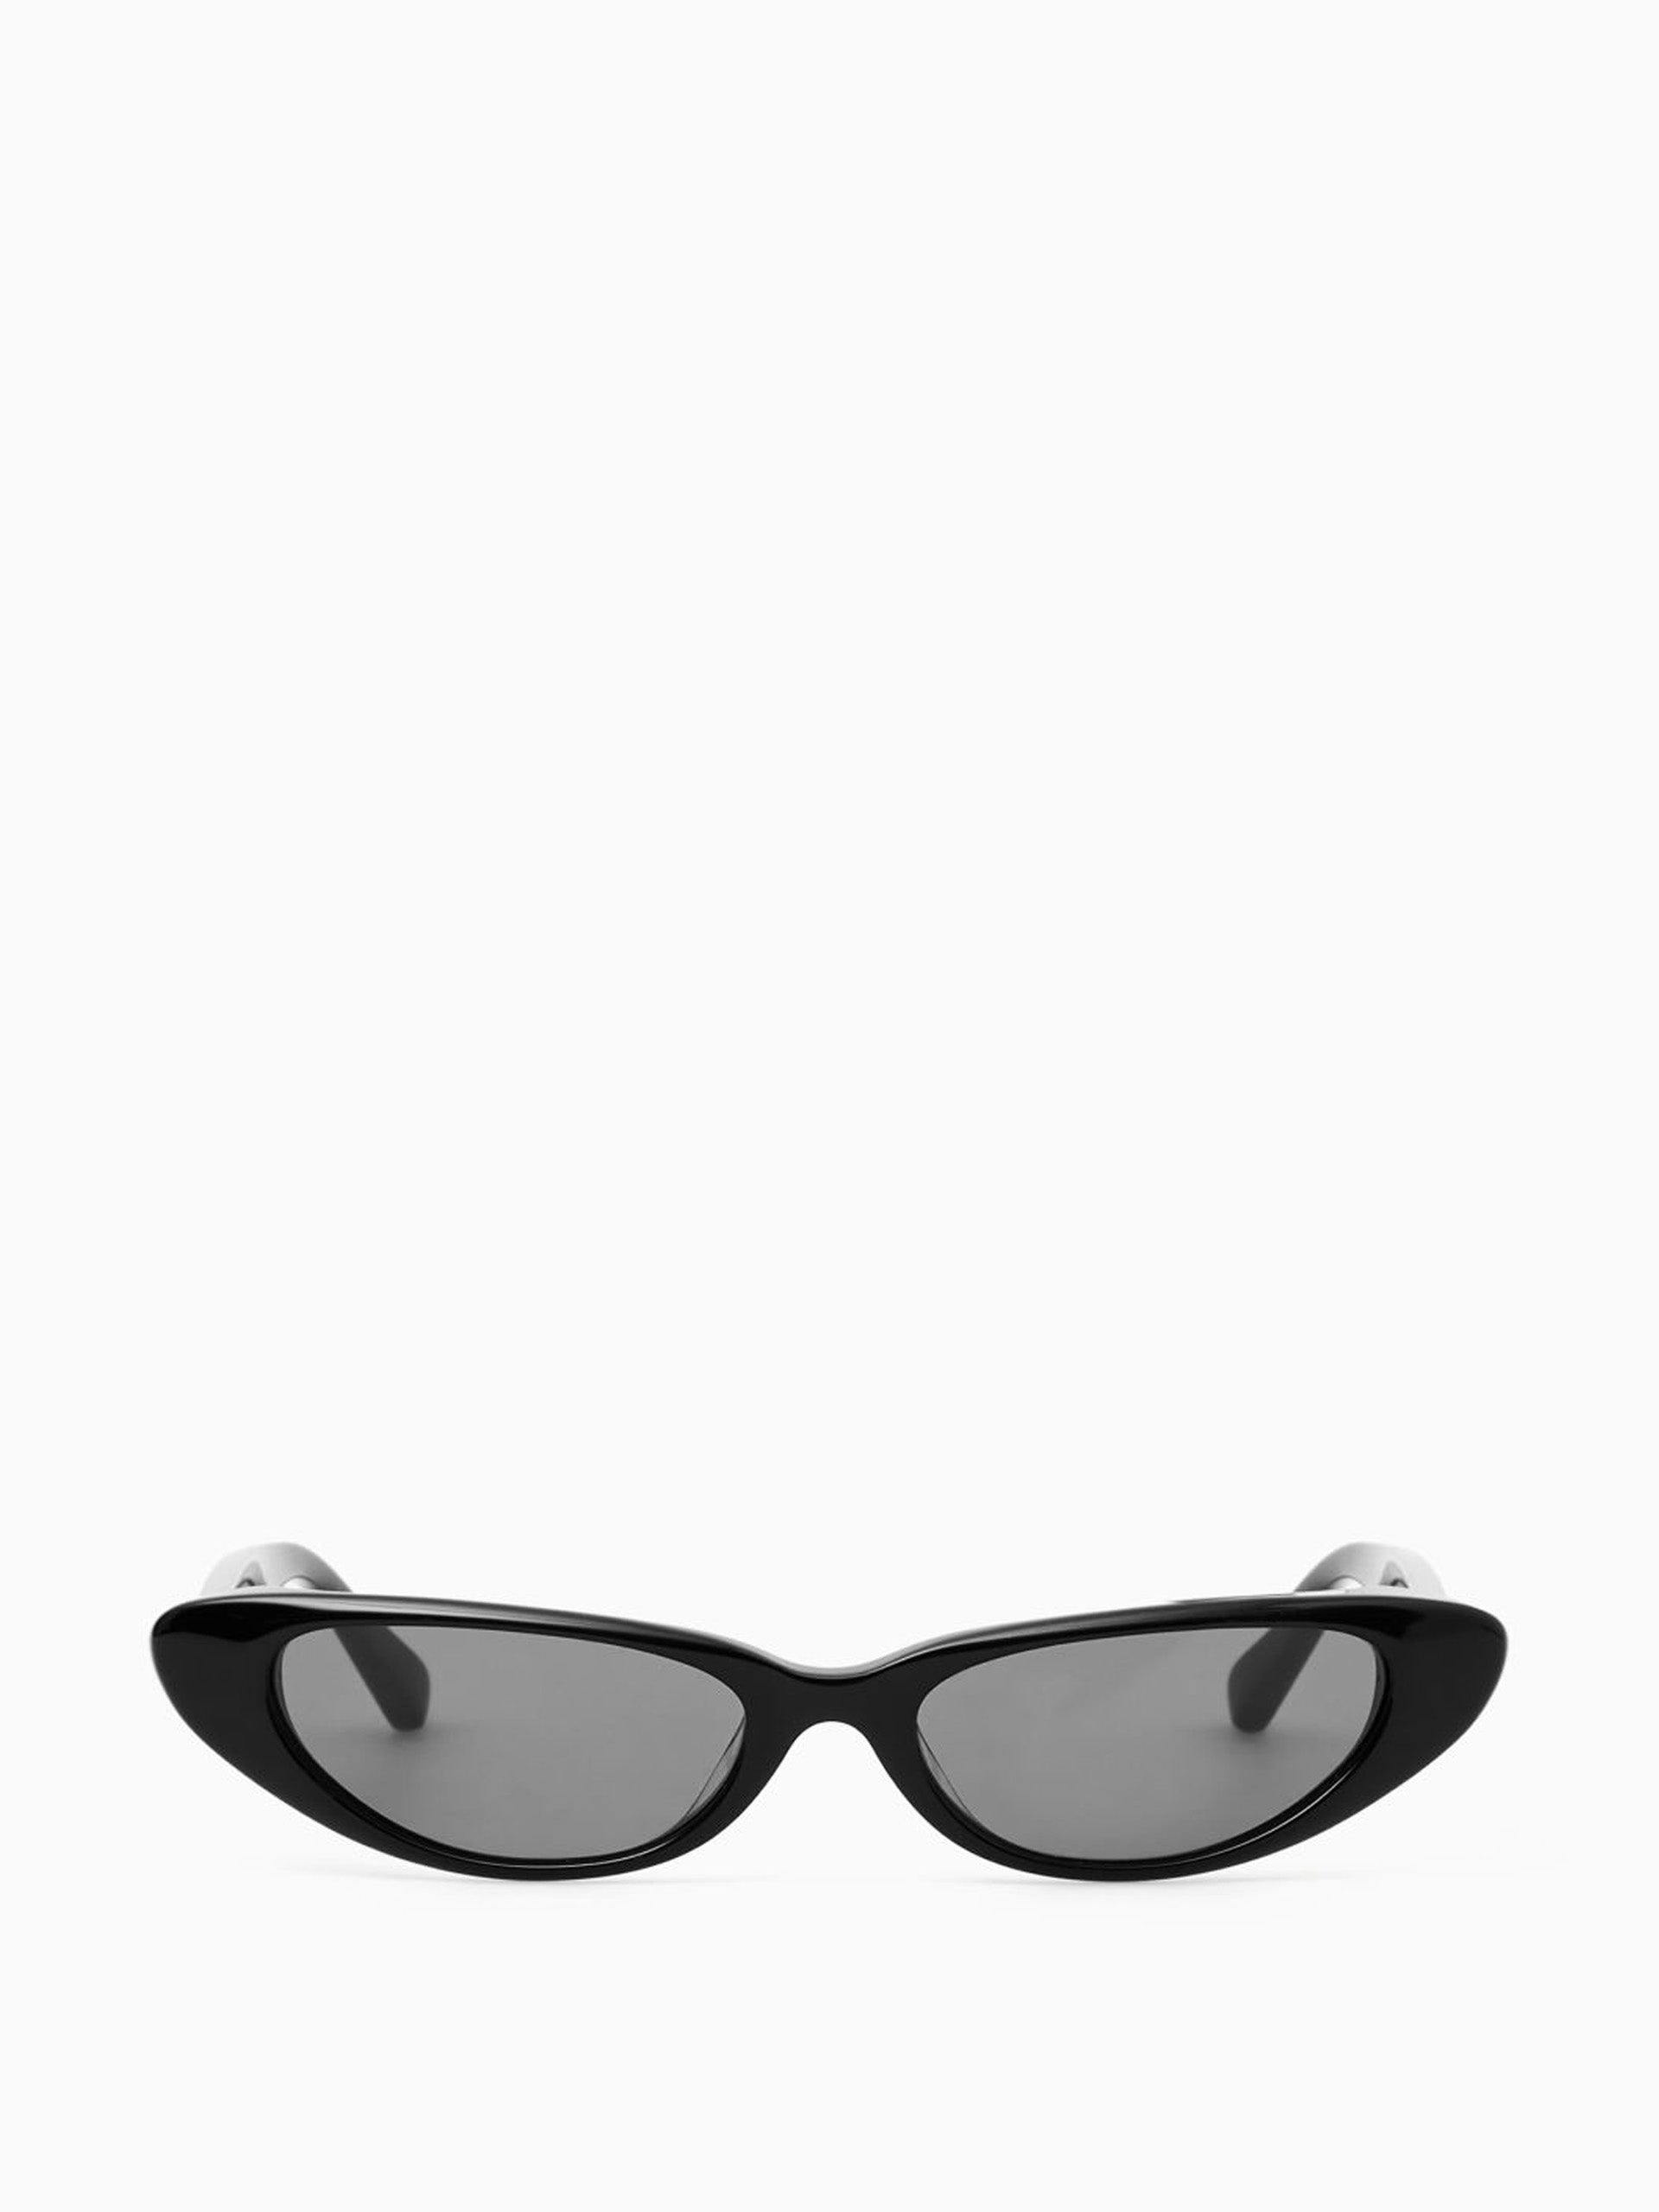 Wing cat eye sunglasses